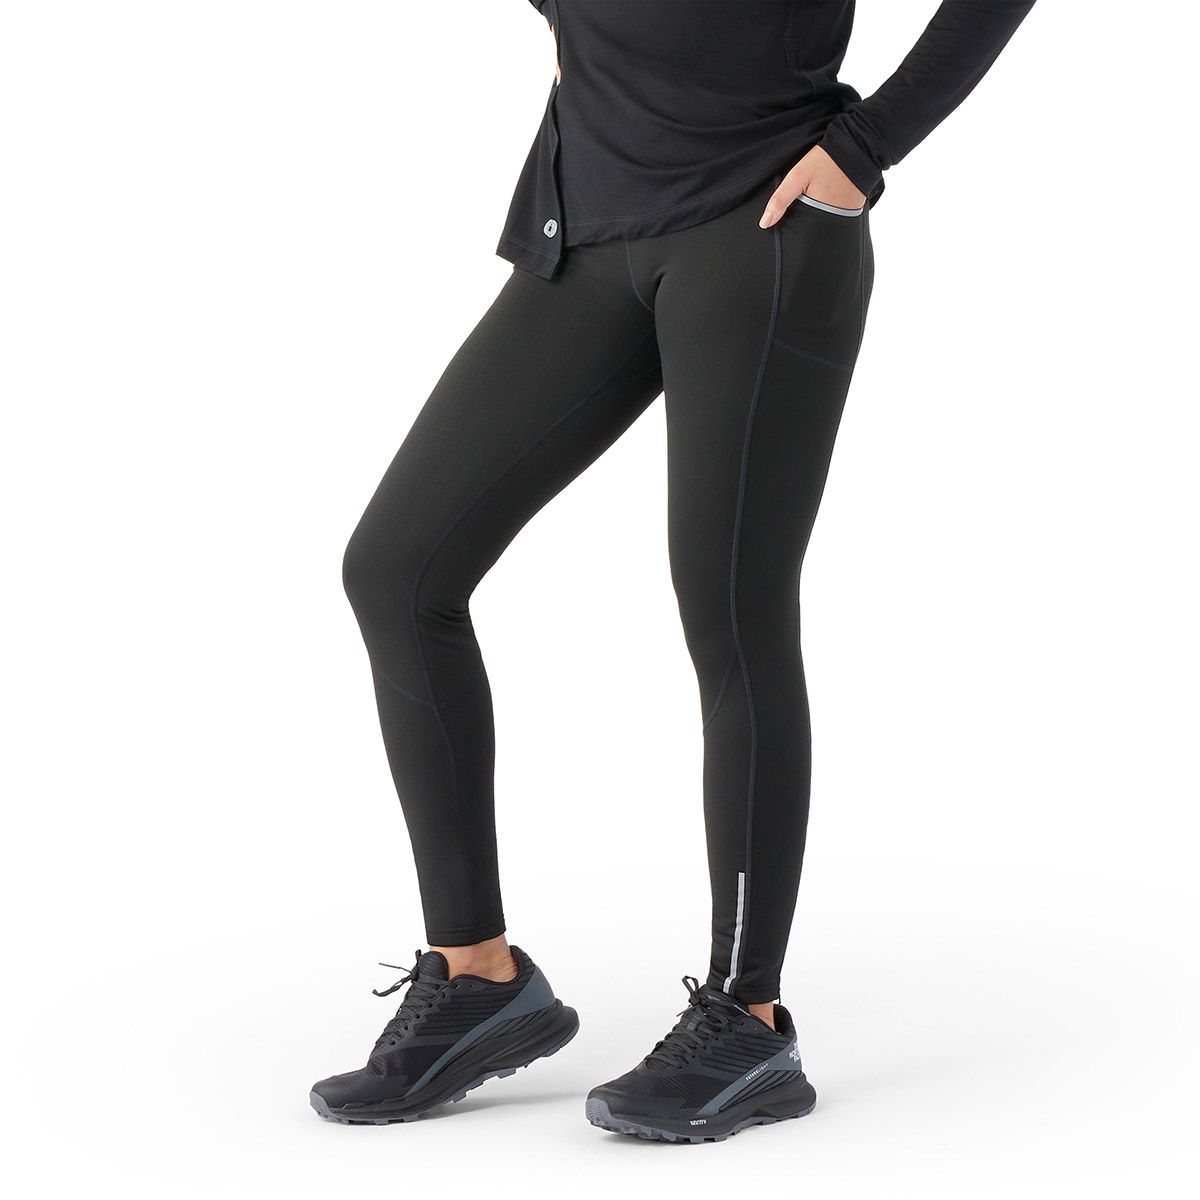 Active Life Womens Size X-Large Fleece Lined Leggings, Black/Italian Plum 